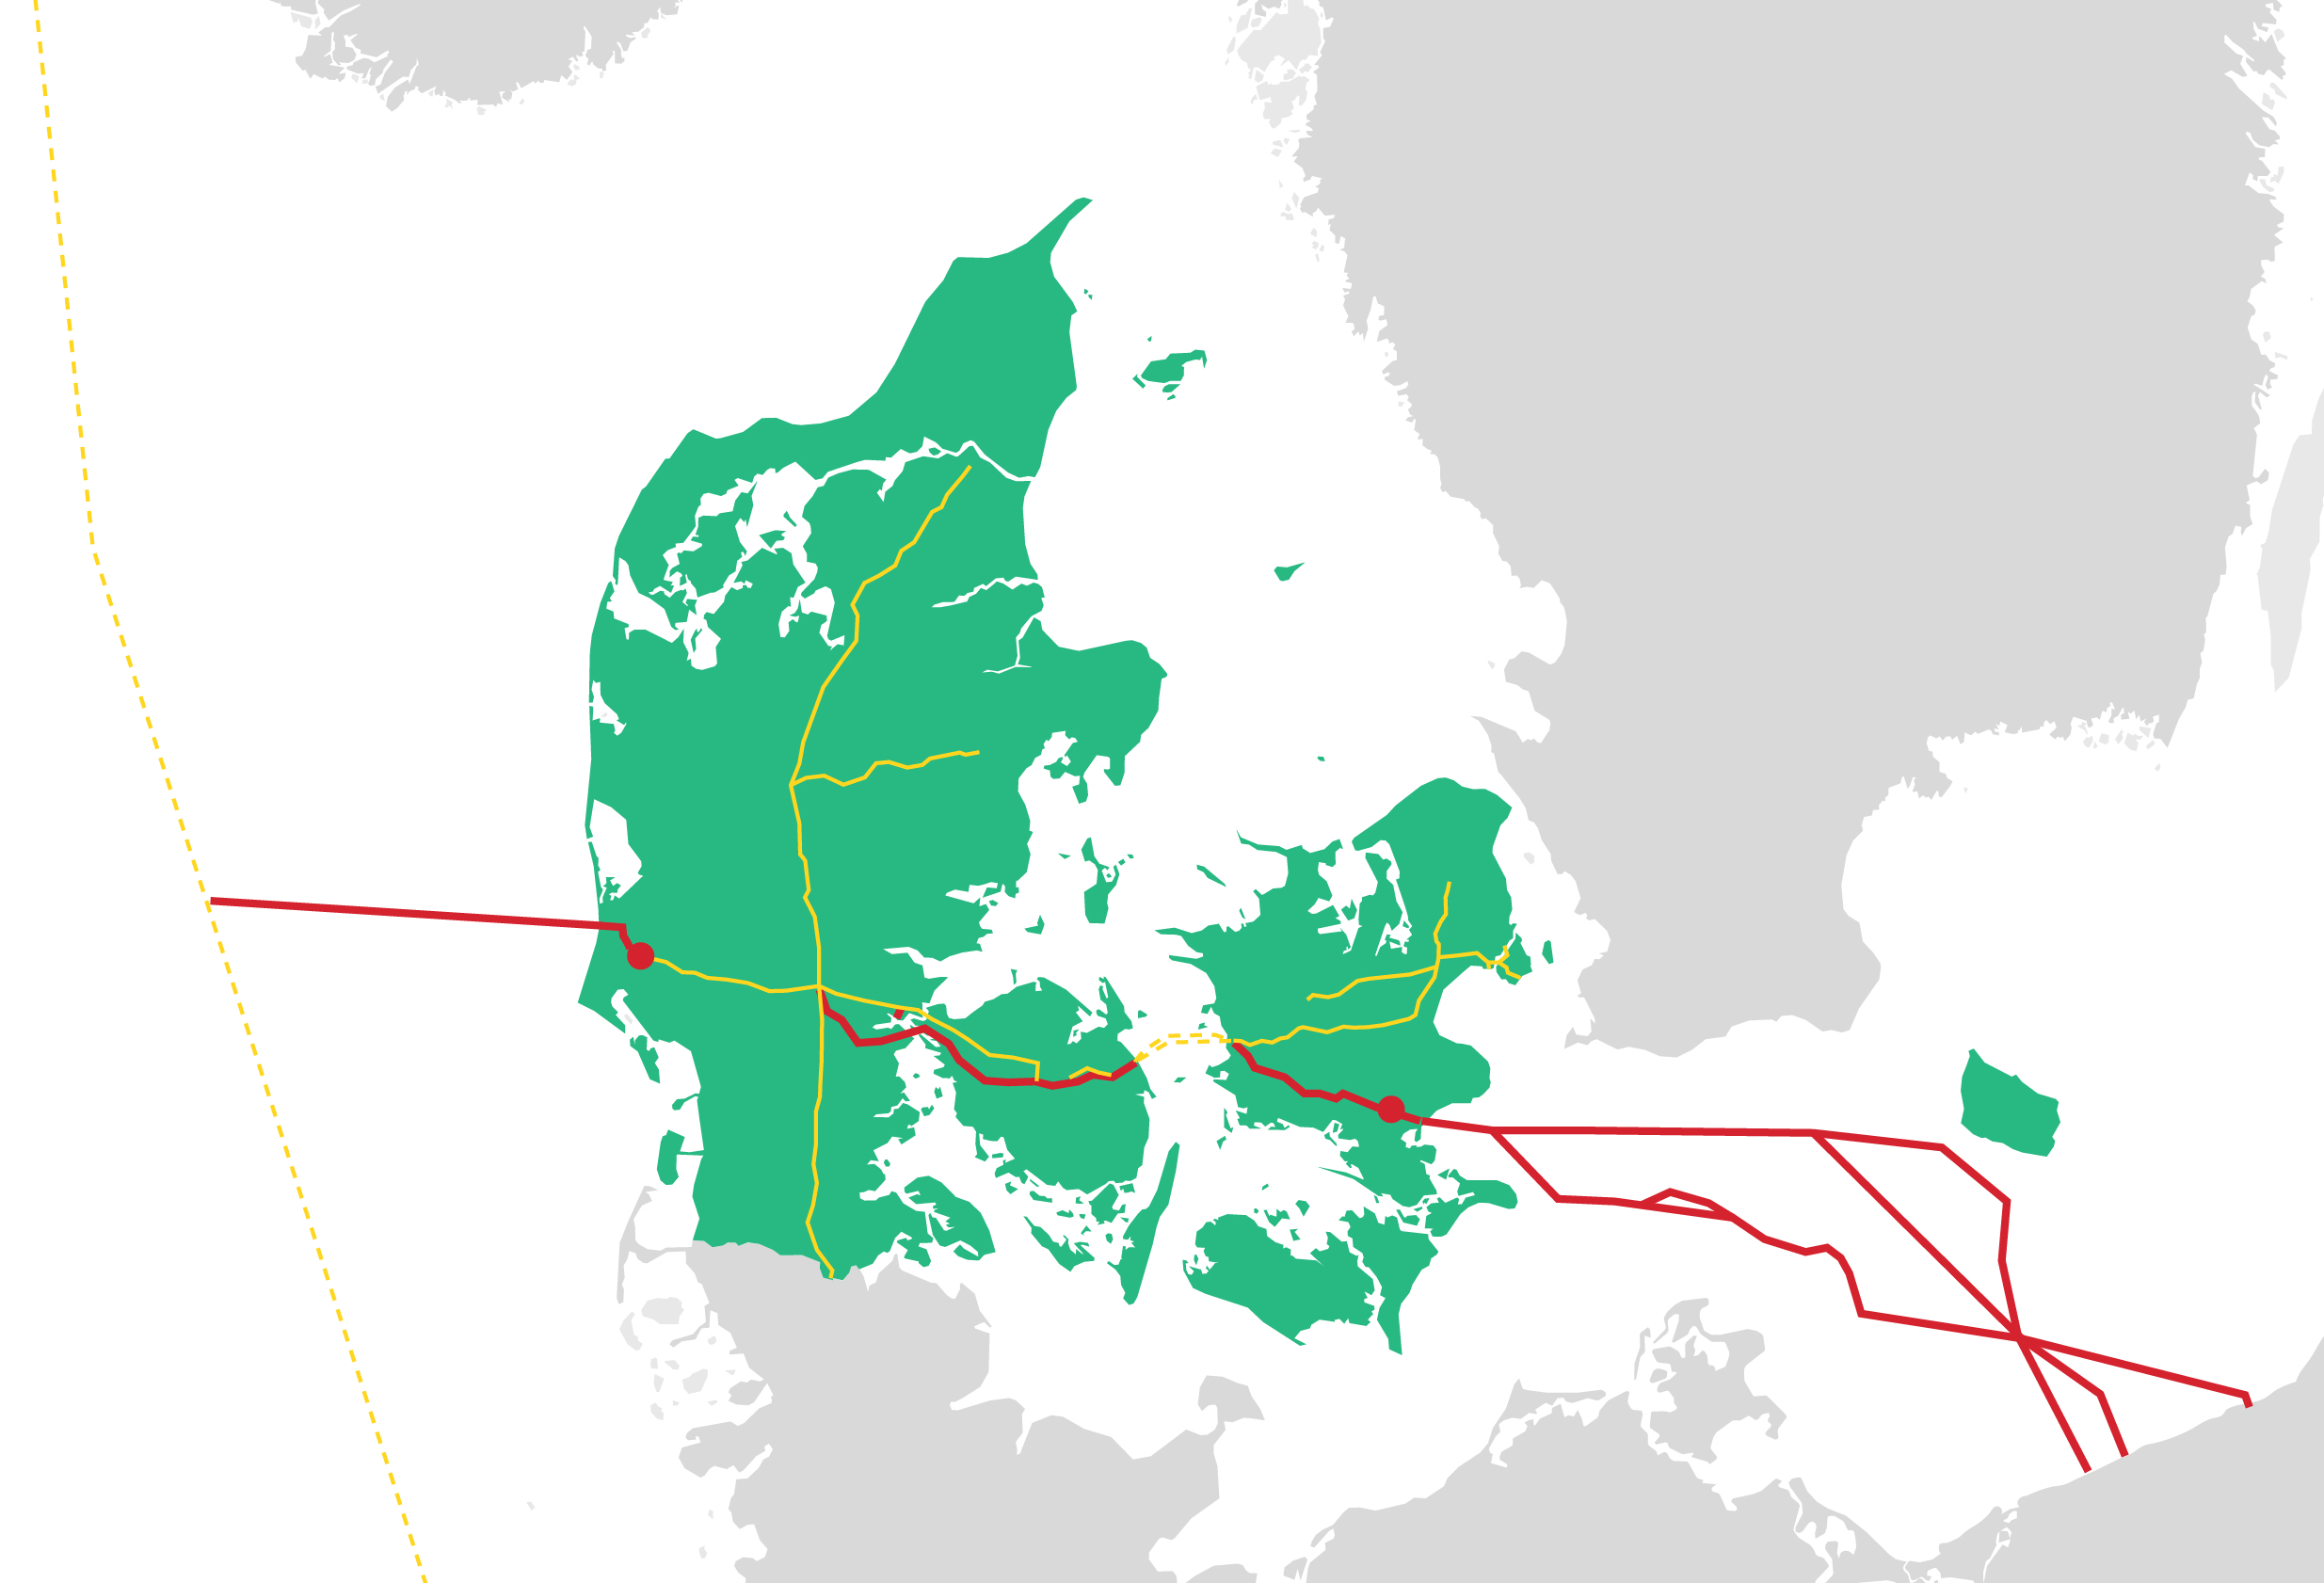 Kort over projektet - Baltic Pipe